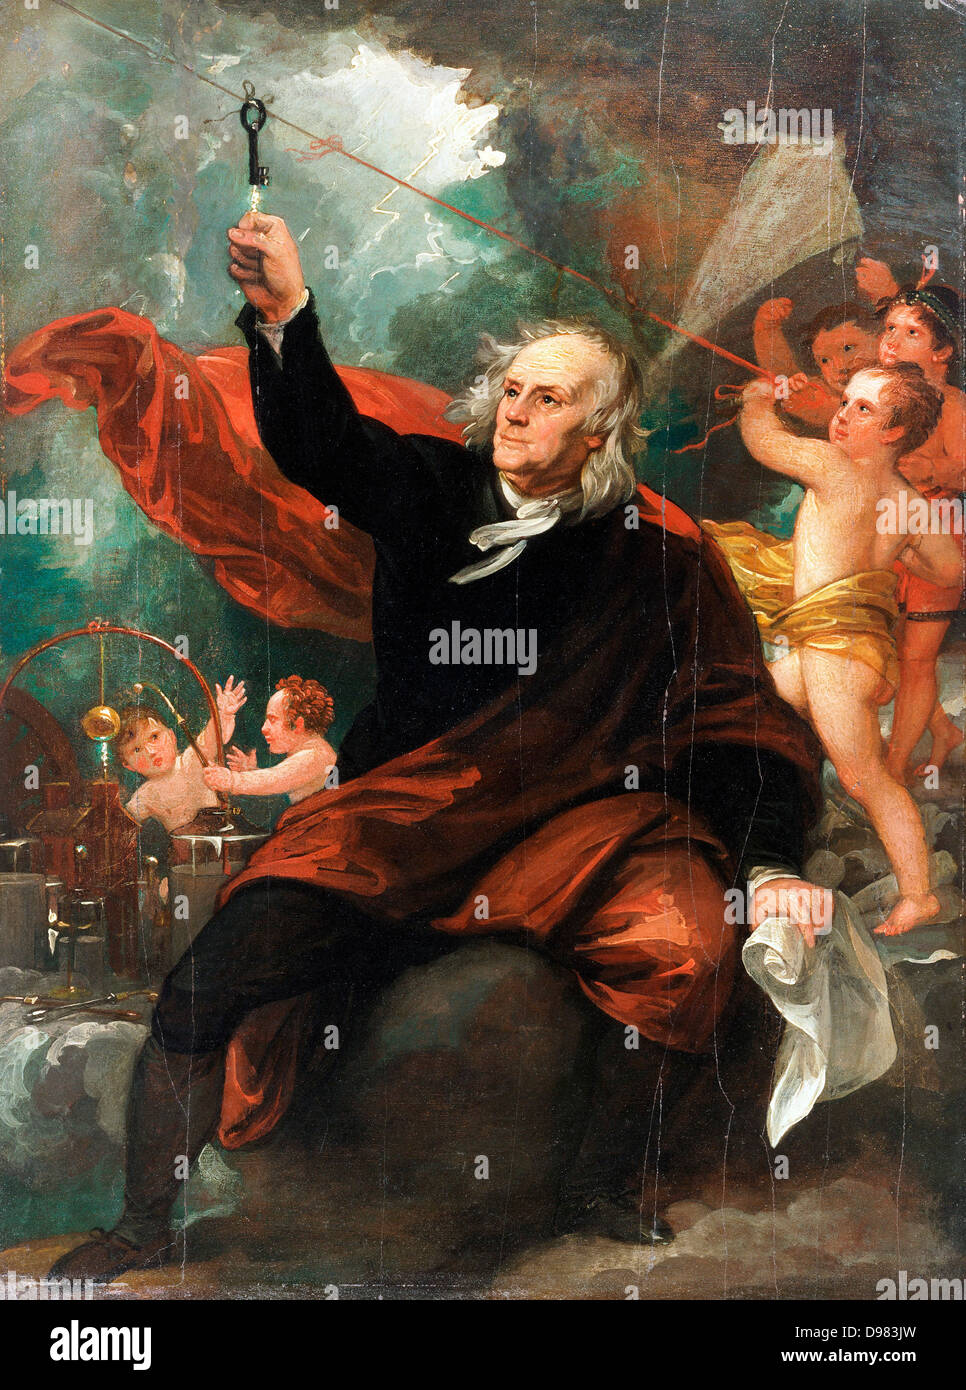 Benjamin West, Benjamin Franklin Zeichnung Strom vom Himmel. Ca. 1816. Öl auf Leinwand. Philadelphia Museum of Art, Entomologicky Stockfoto